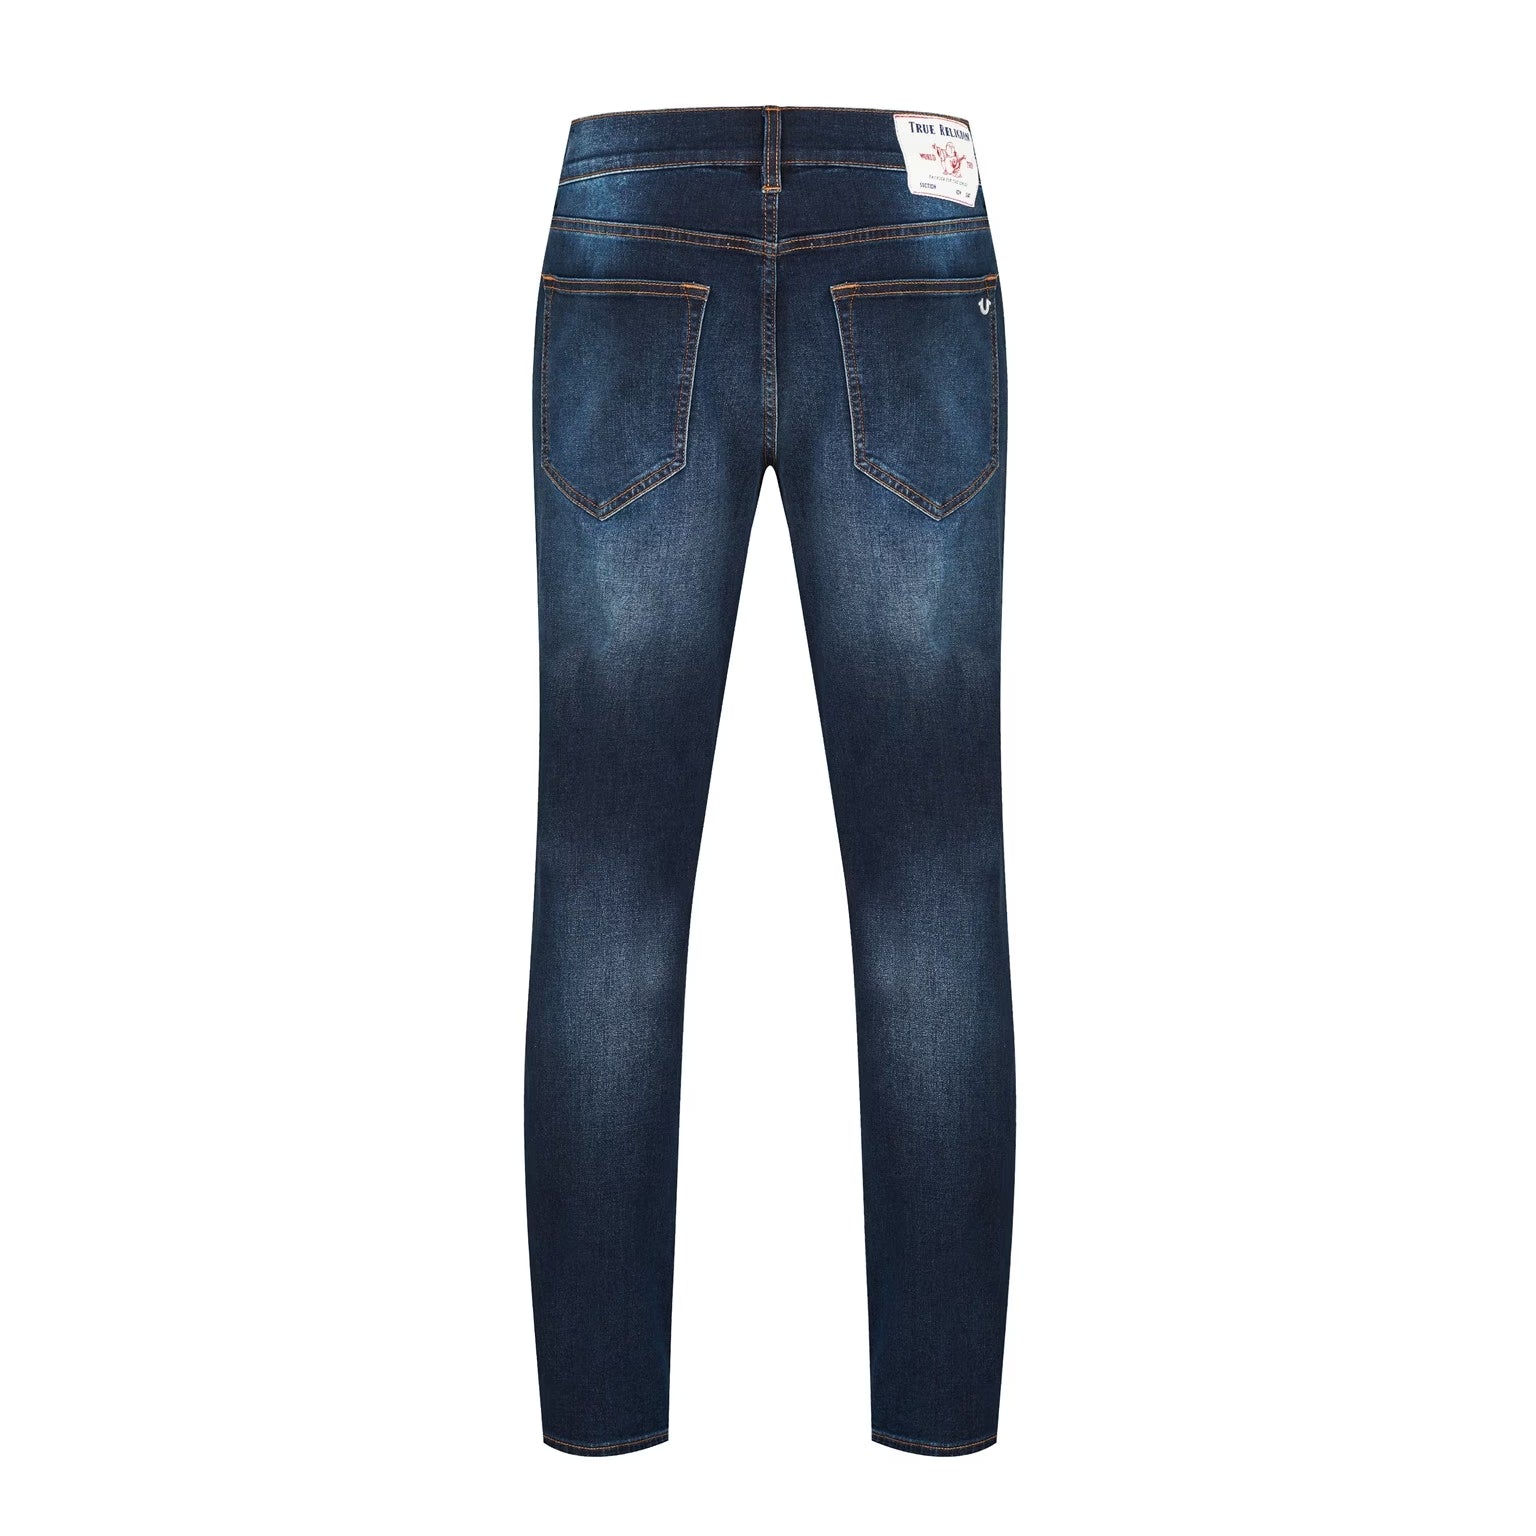 True Religion ROCCO NF Jeans - BZ Inglorious - Escape Menswear